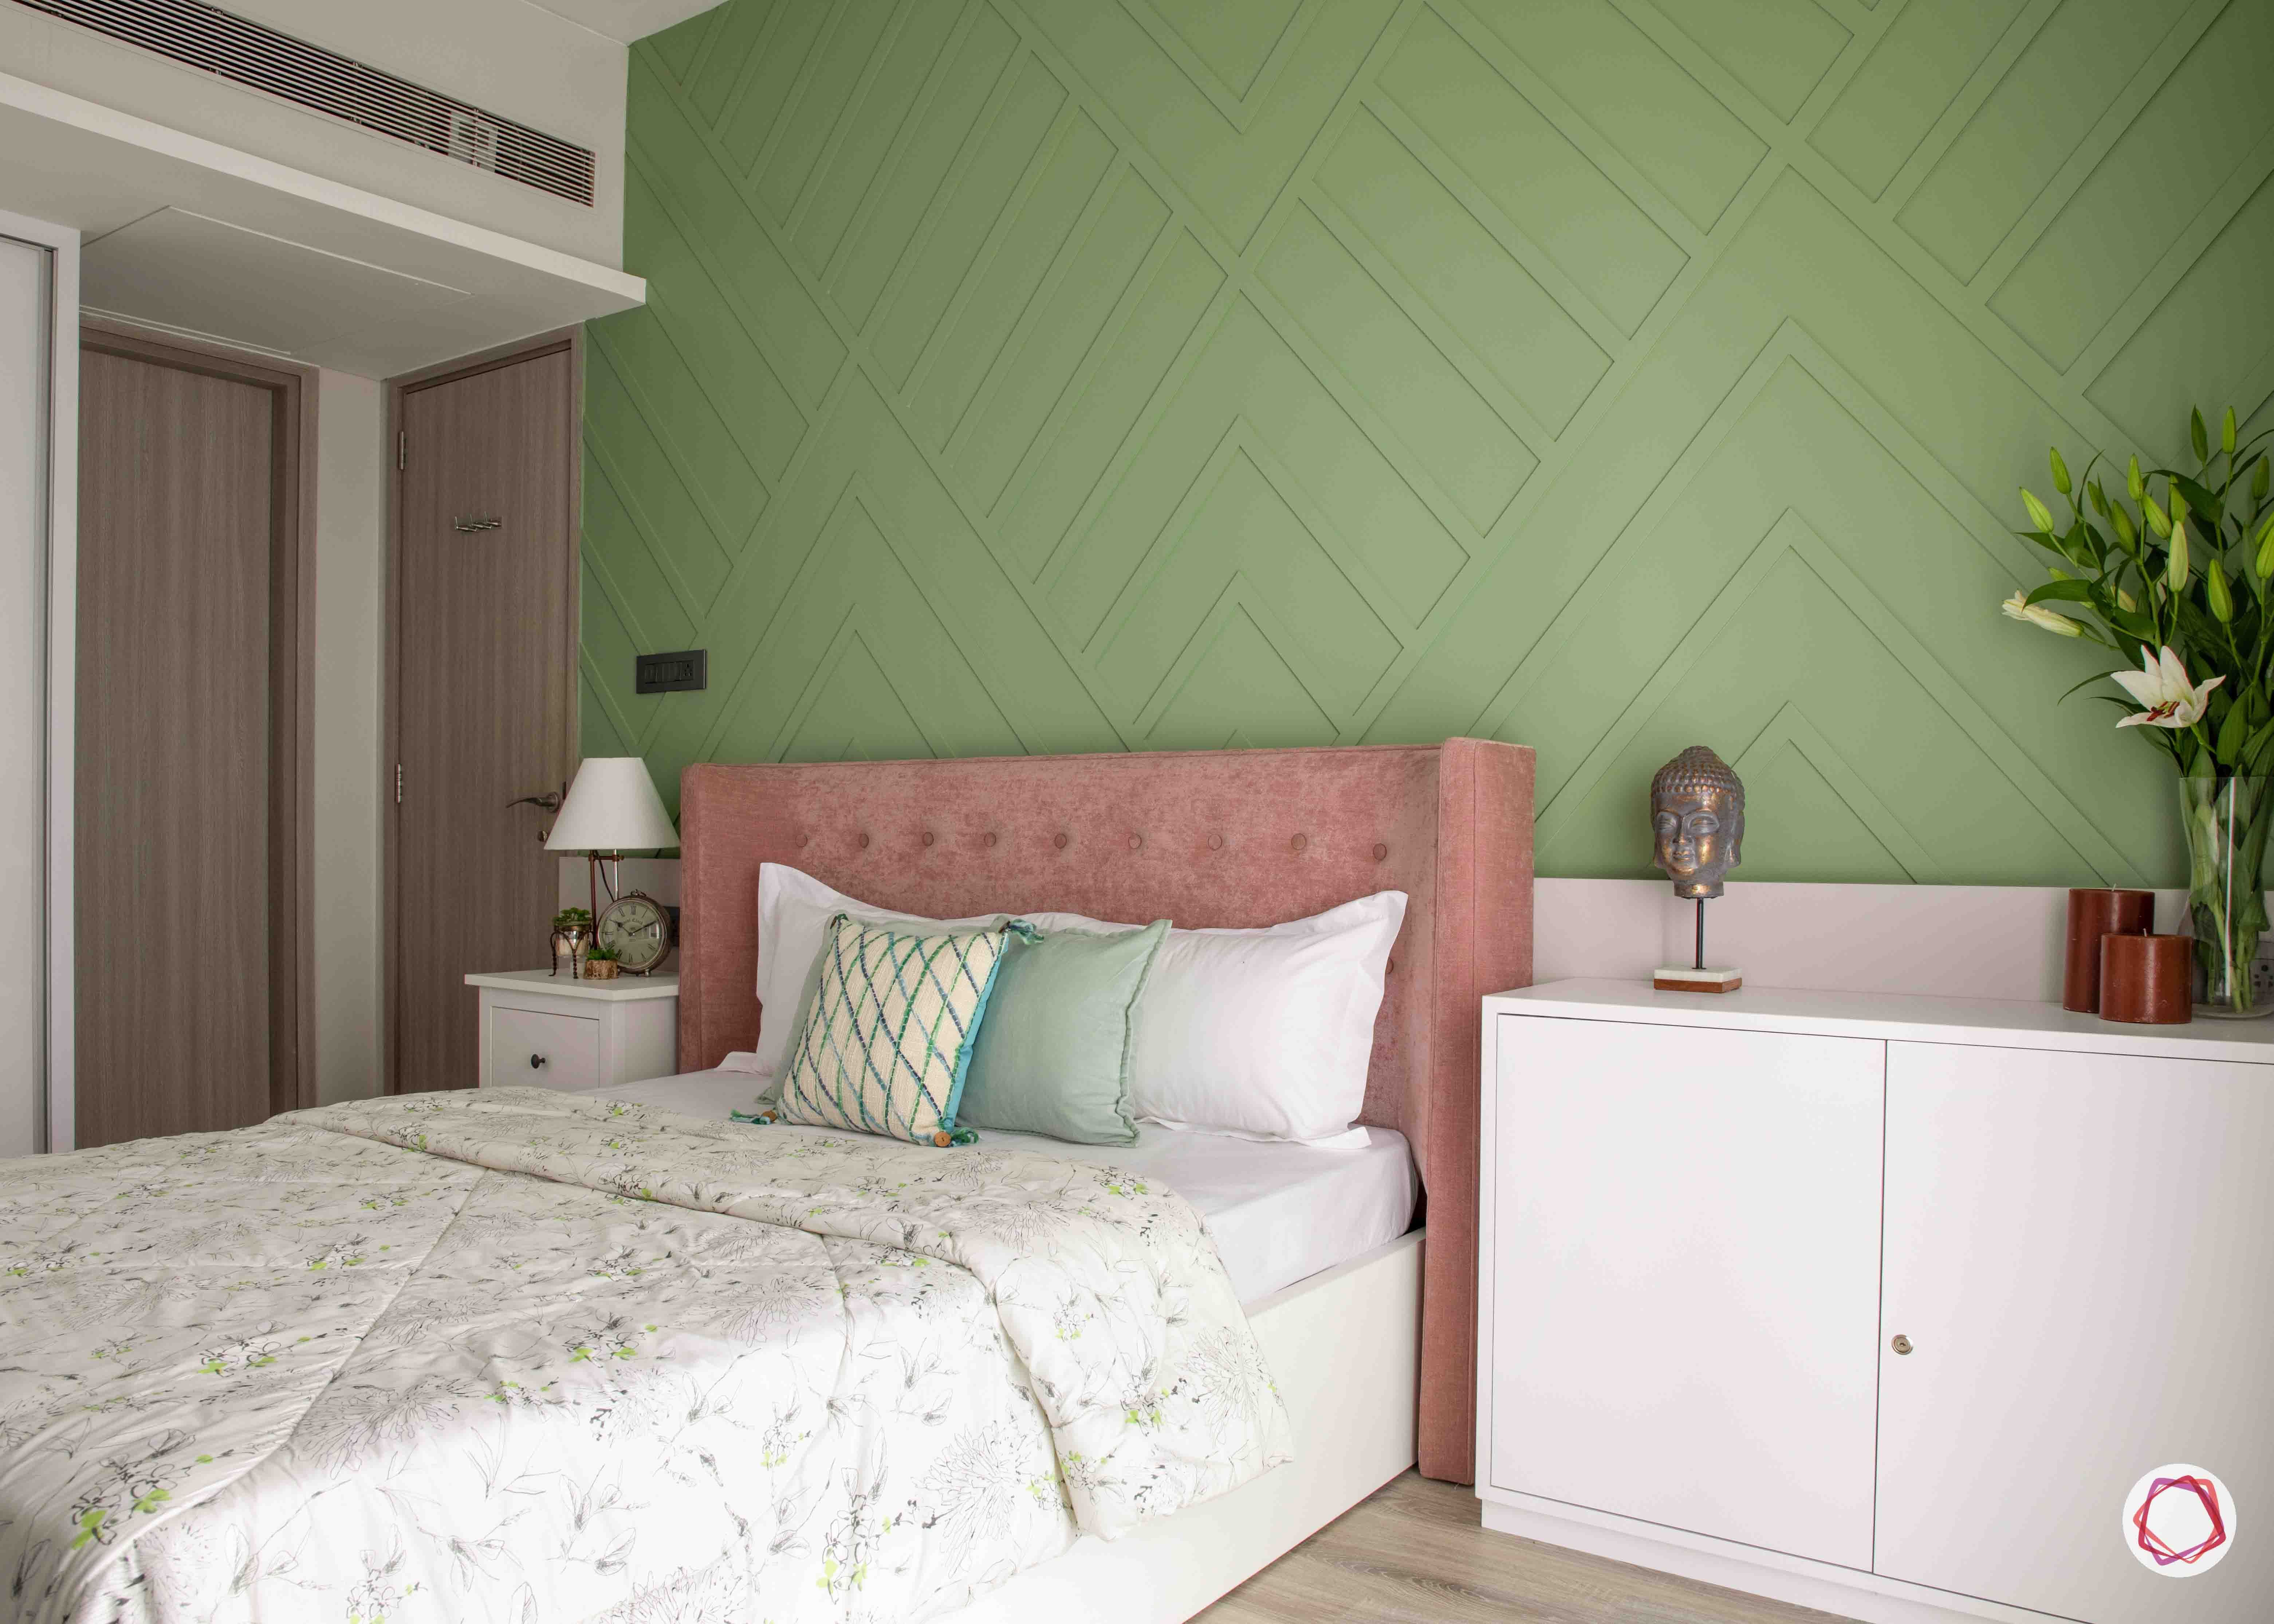 apartment-design-green-wall-ideas-pink-headboard-designs